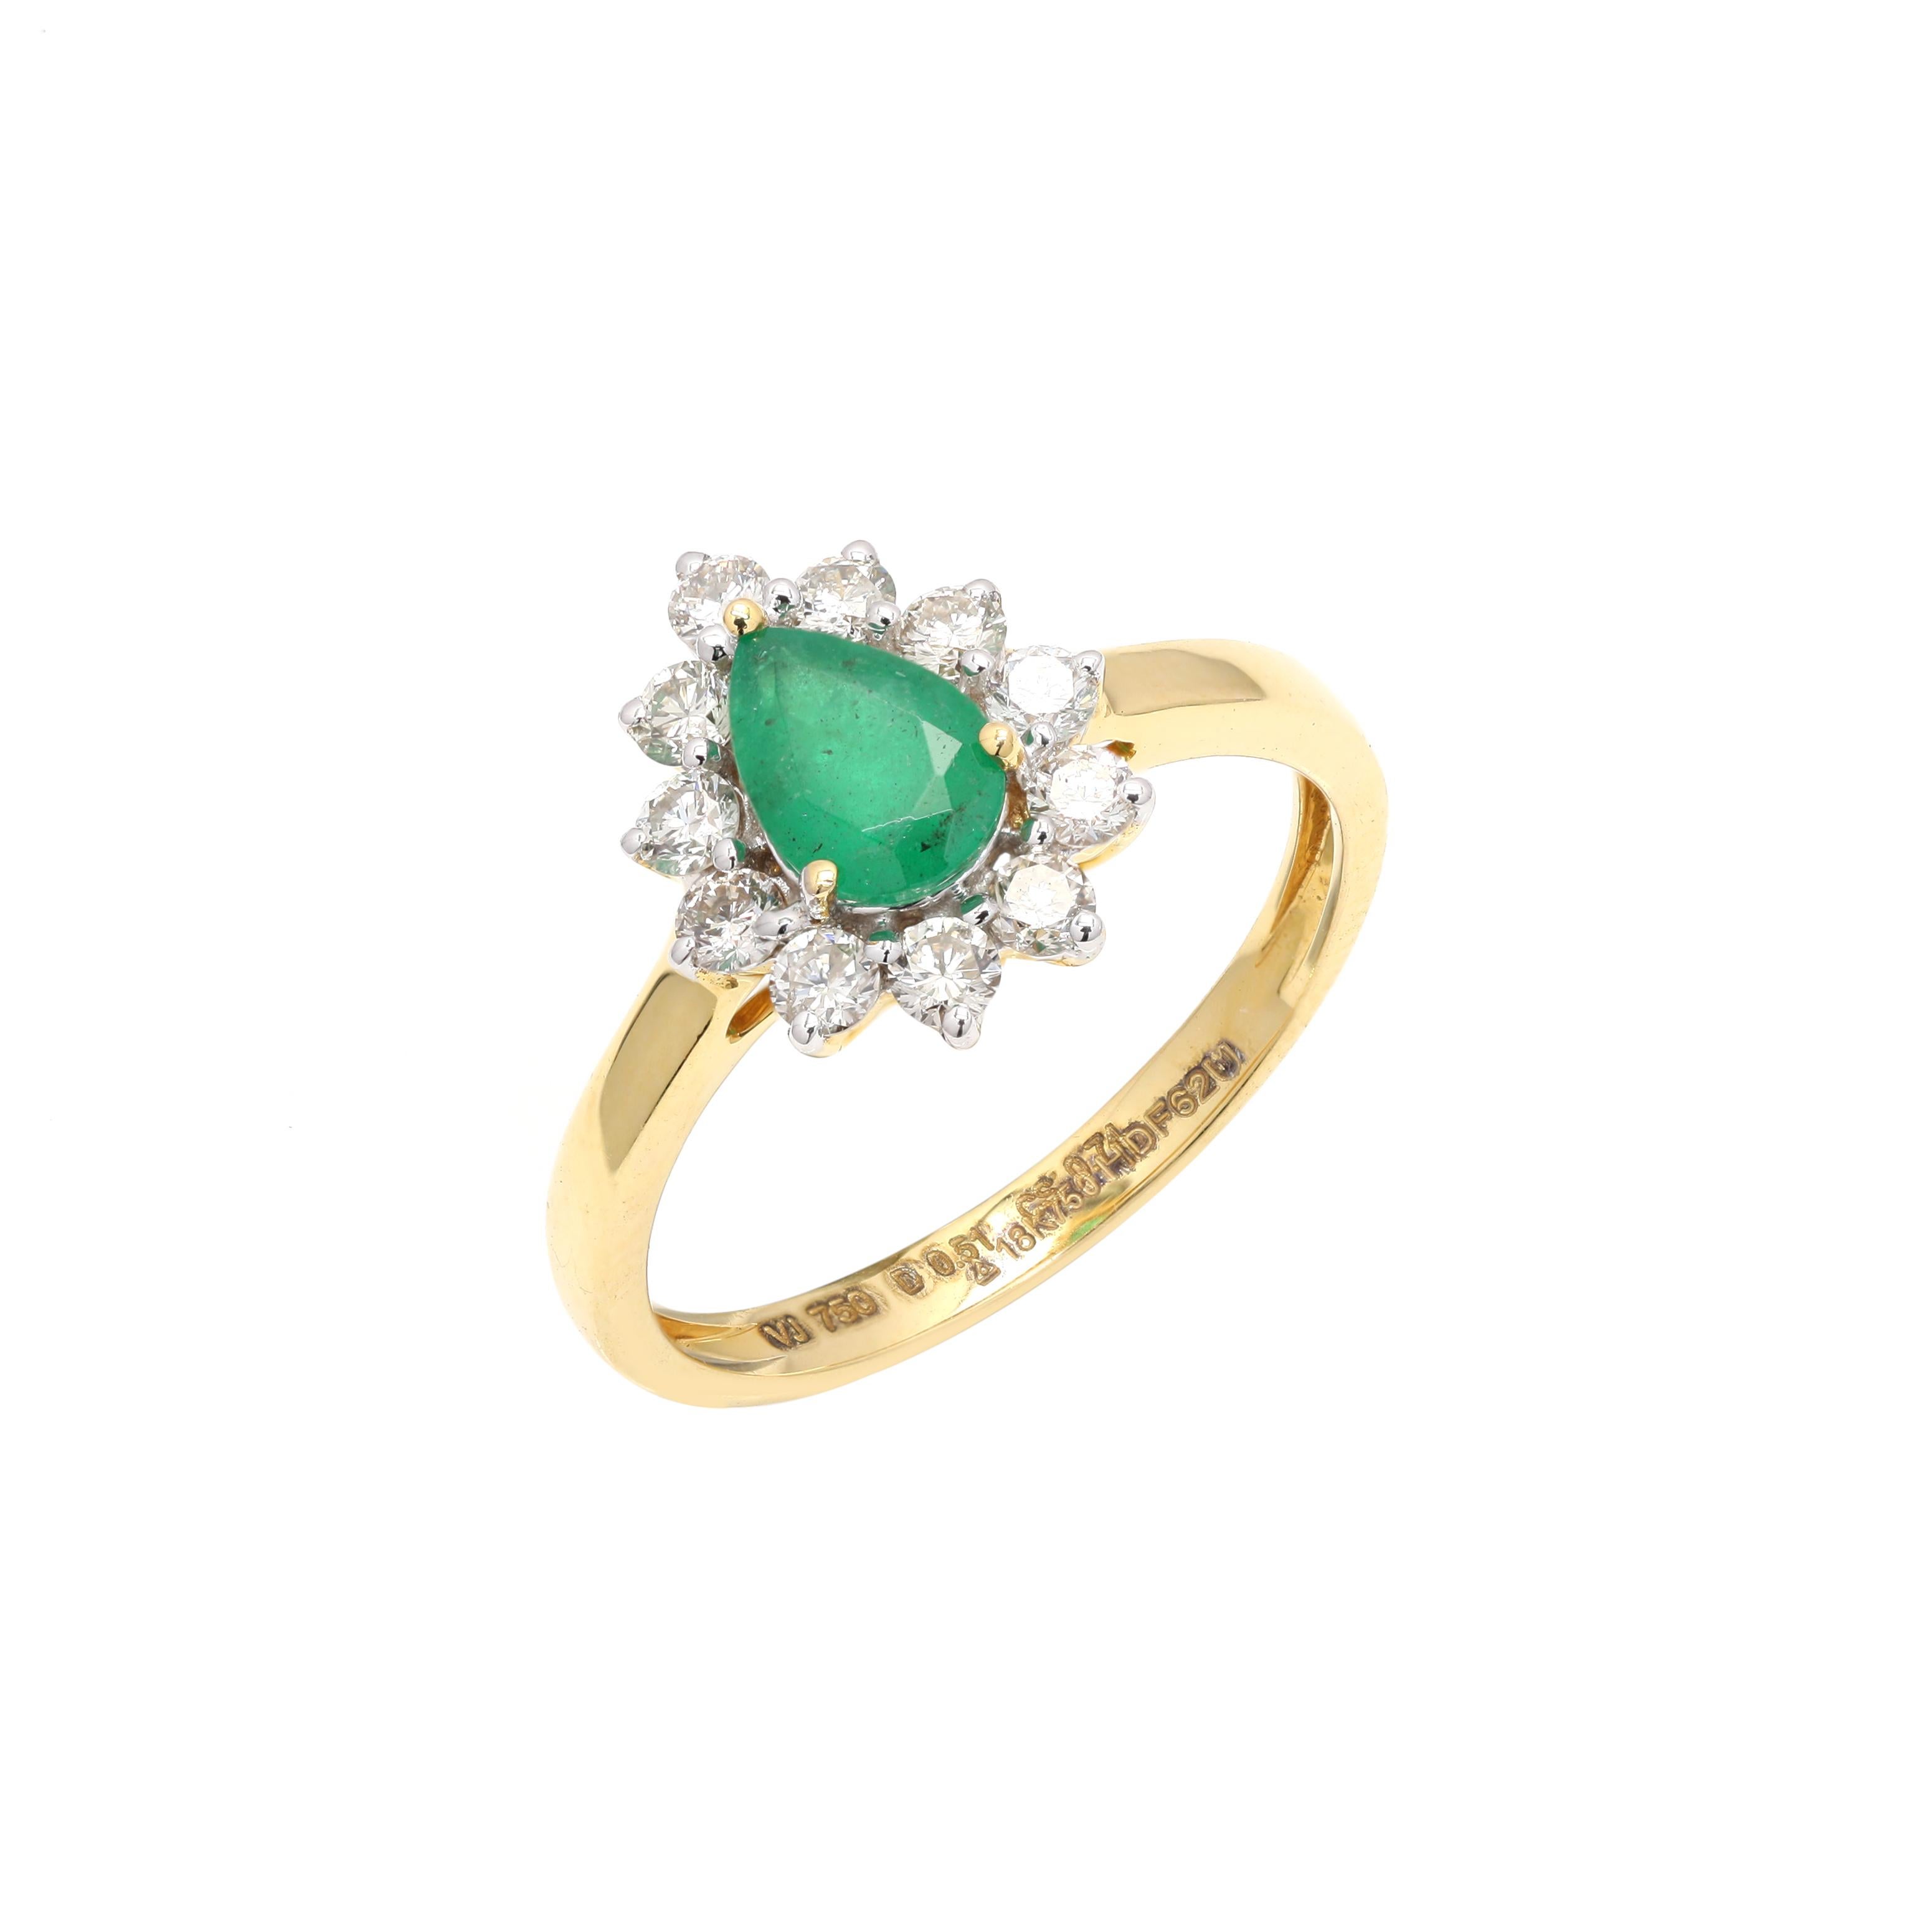 For Sale:  18k Yellow Gold Classic Halo Diamond Pear Cut Emerald Wedding Ring 2